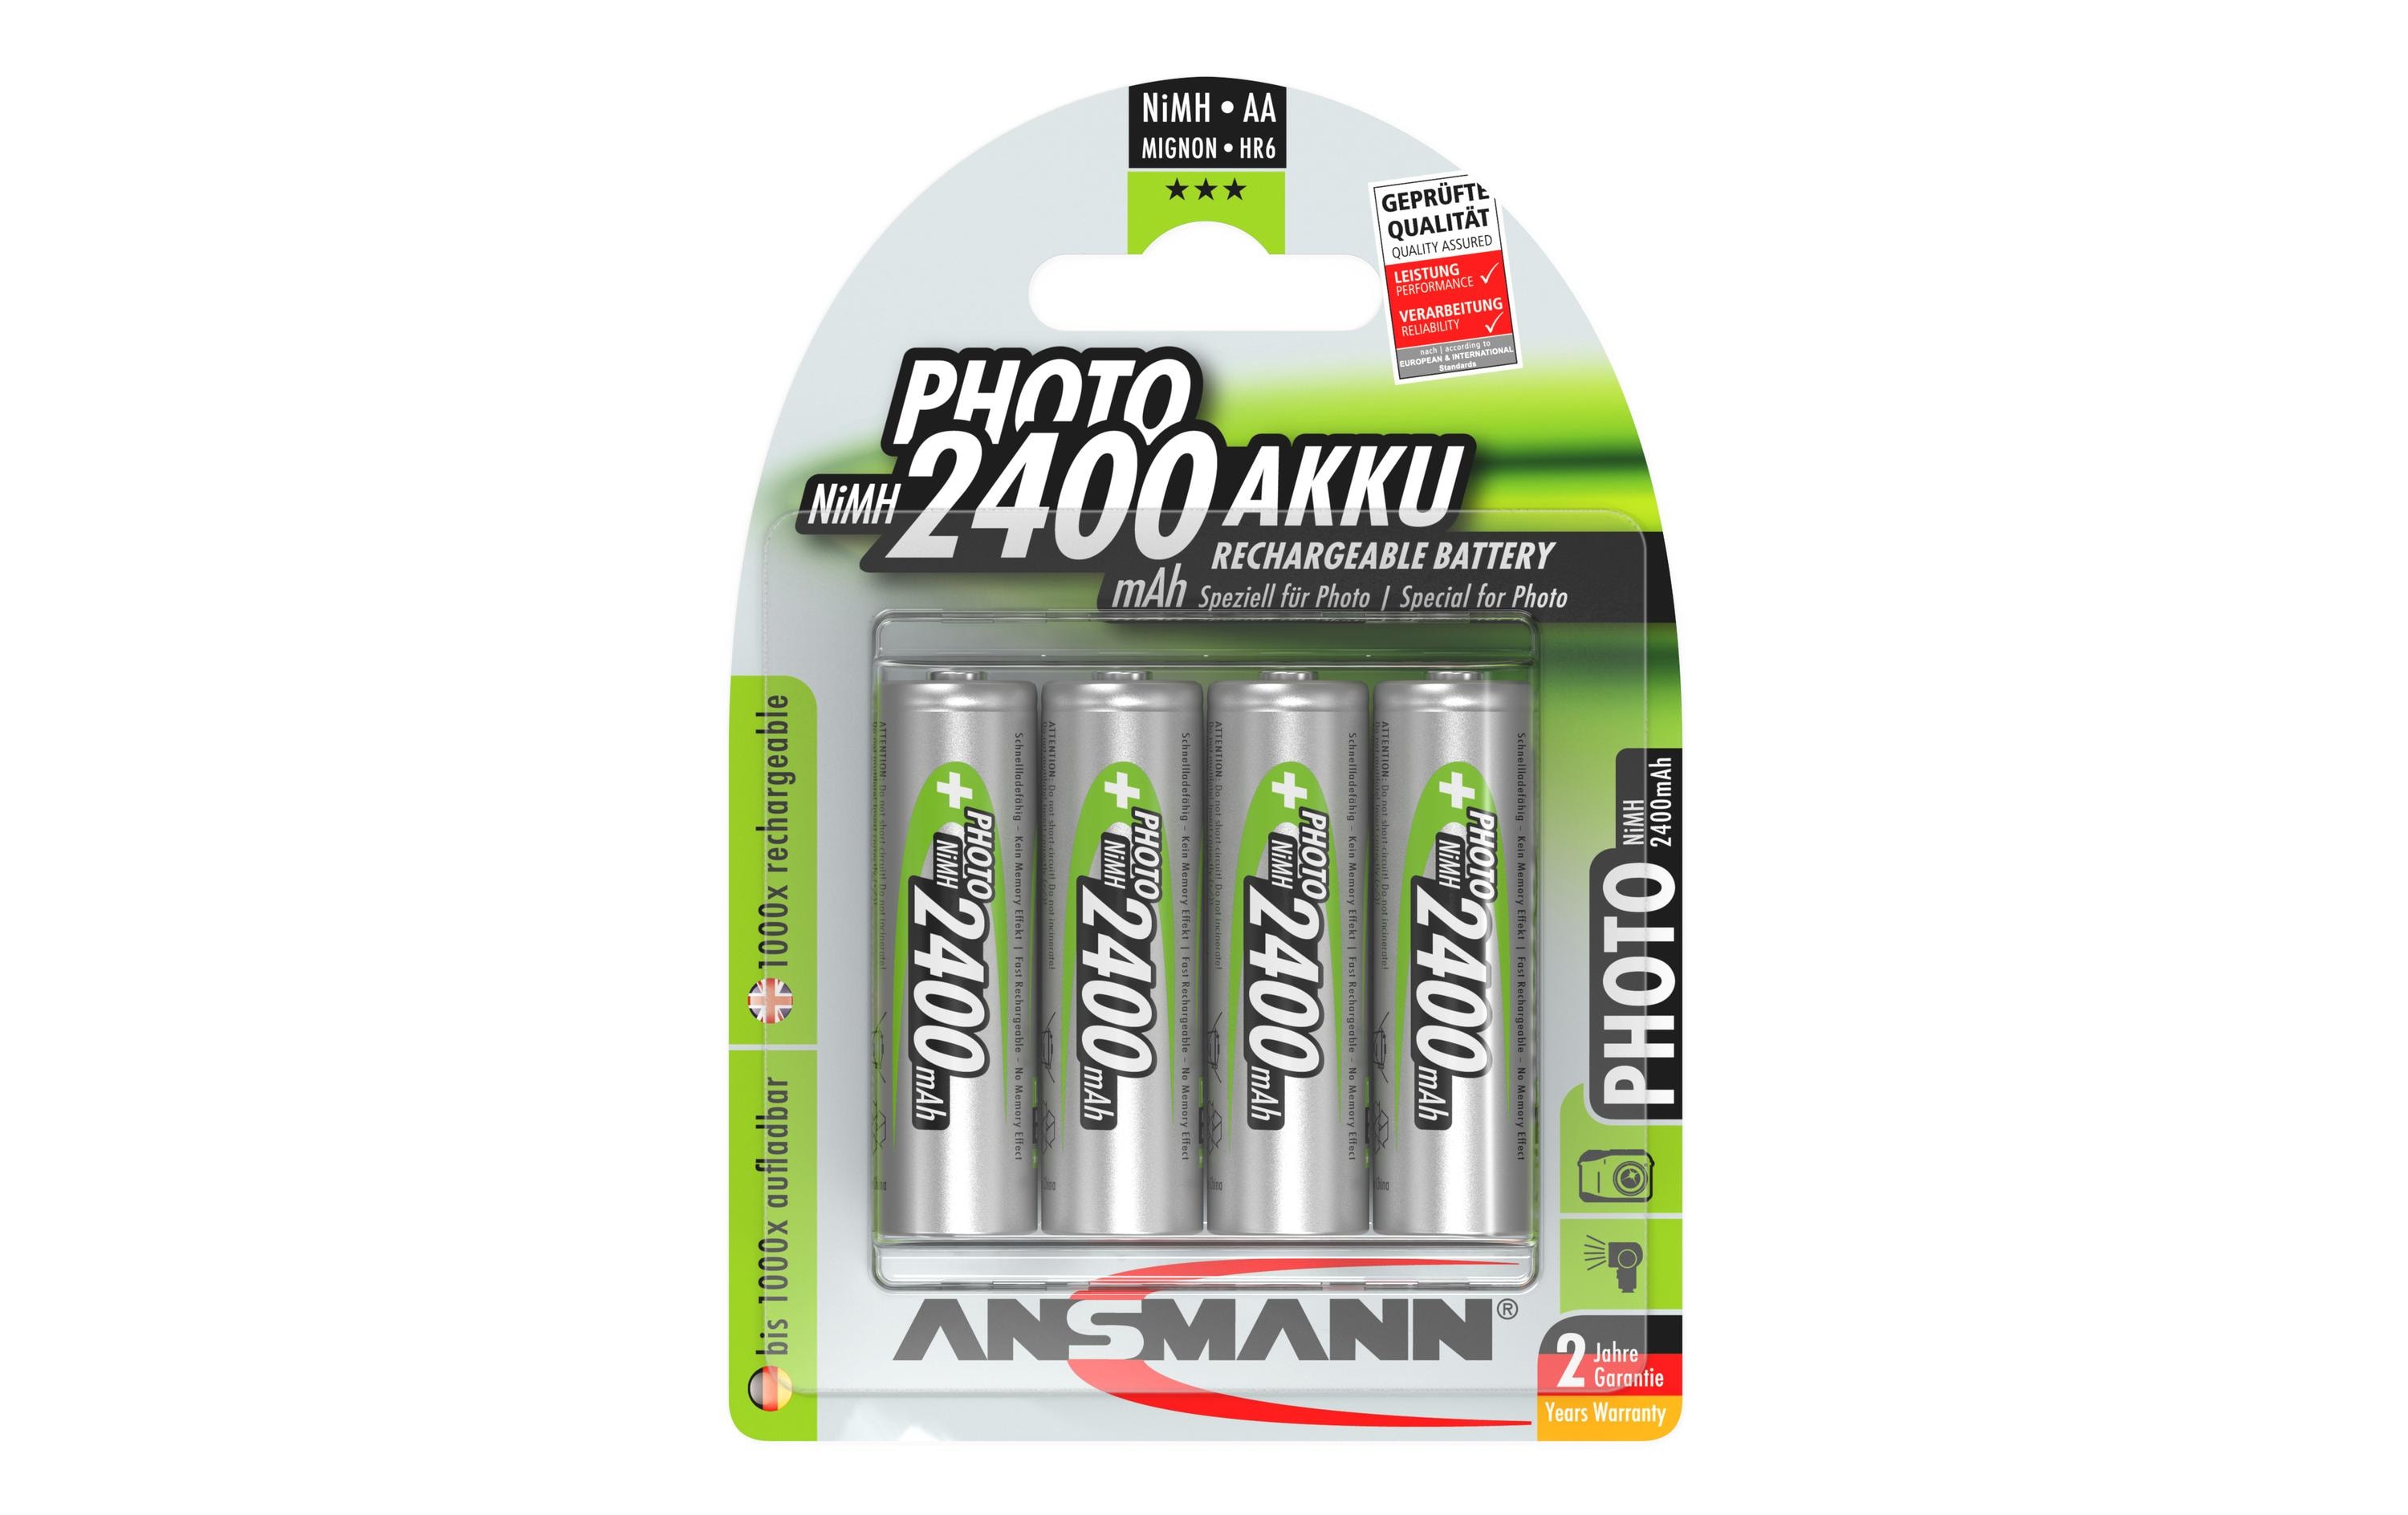 Ansmann Akku 4x AA 2400 mAh für Digitalkameras, Blitzgeräte, usw.